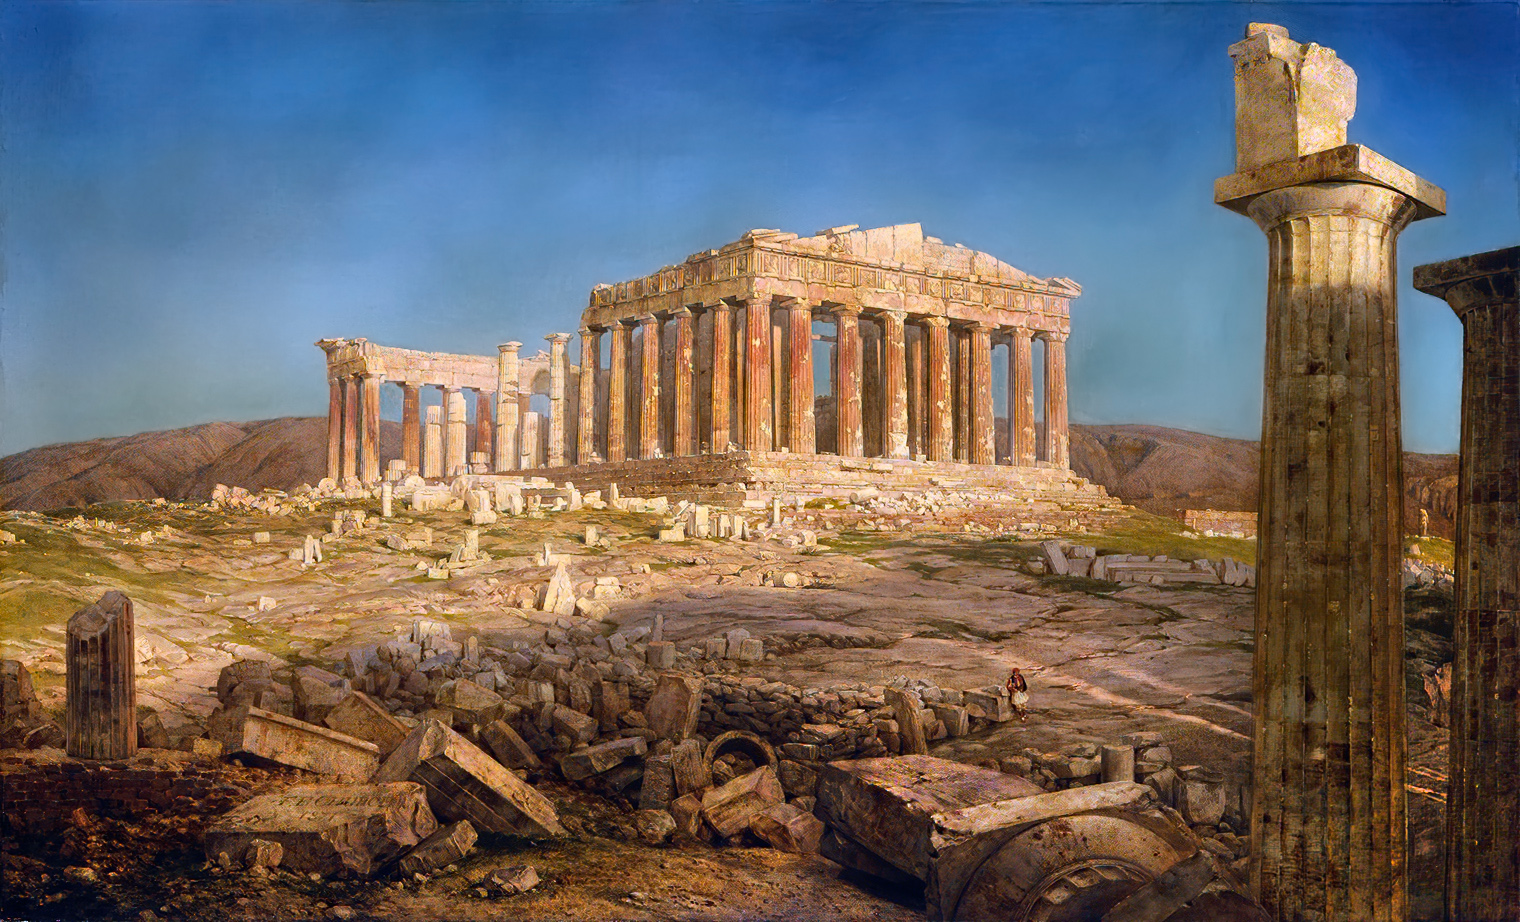 Parthenon | Frederic Edwin Church (1826–1900) | The Greek Parthenon (c. 447 BCE), i.e., temple of Athena, influenced the neoclassical architecture designs of this era. | Metropolitan Museum of Art